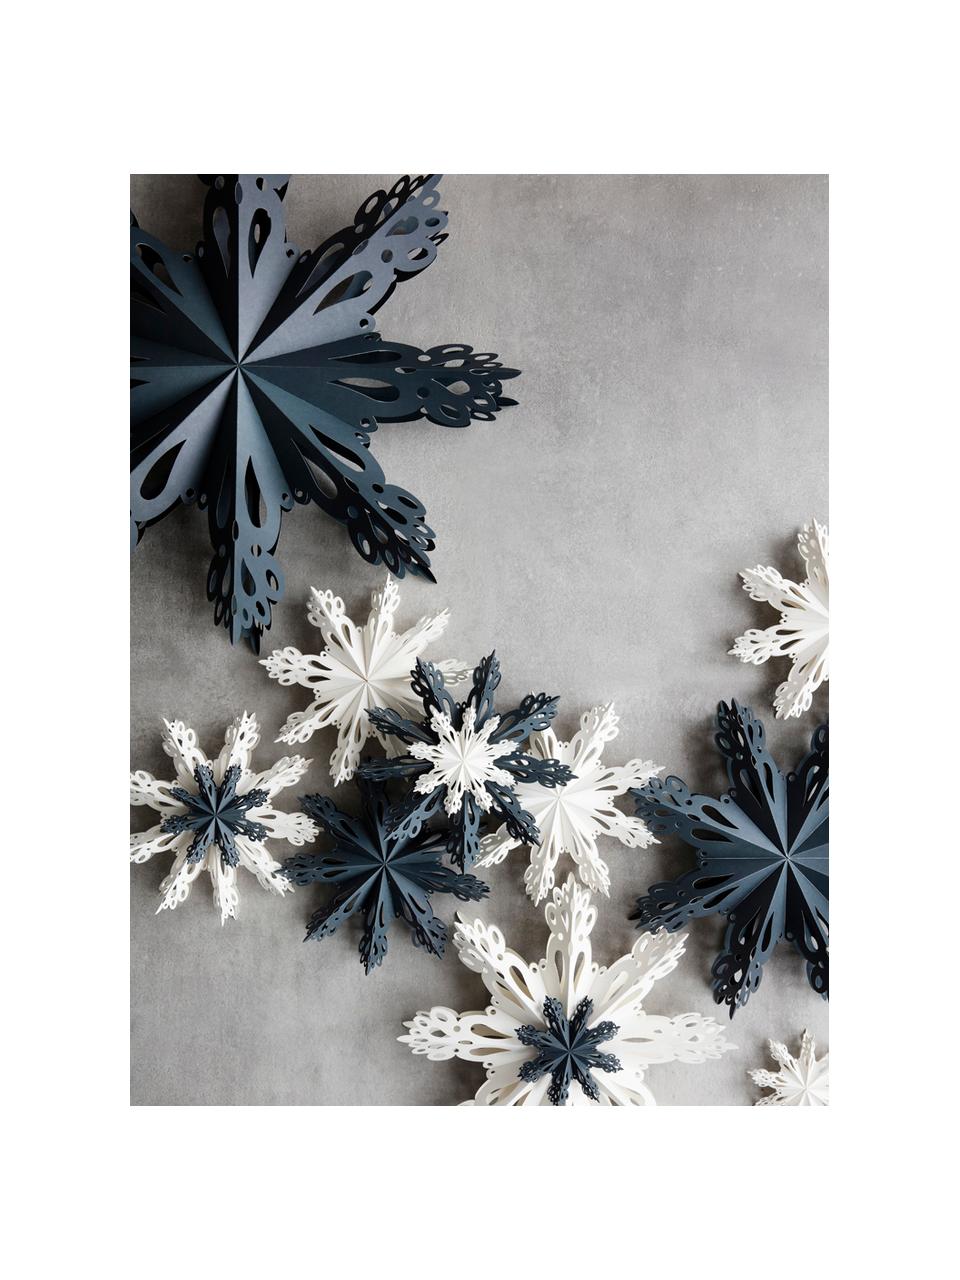 Schneeflocken-Anhänger Snowflake, Papier, Weiss, Ø 30 cm